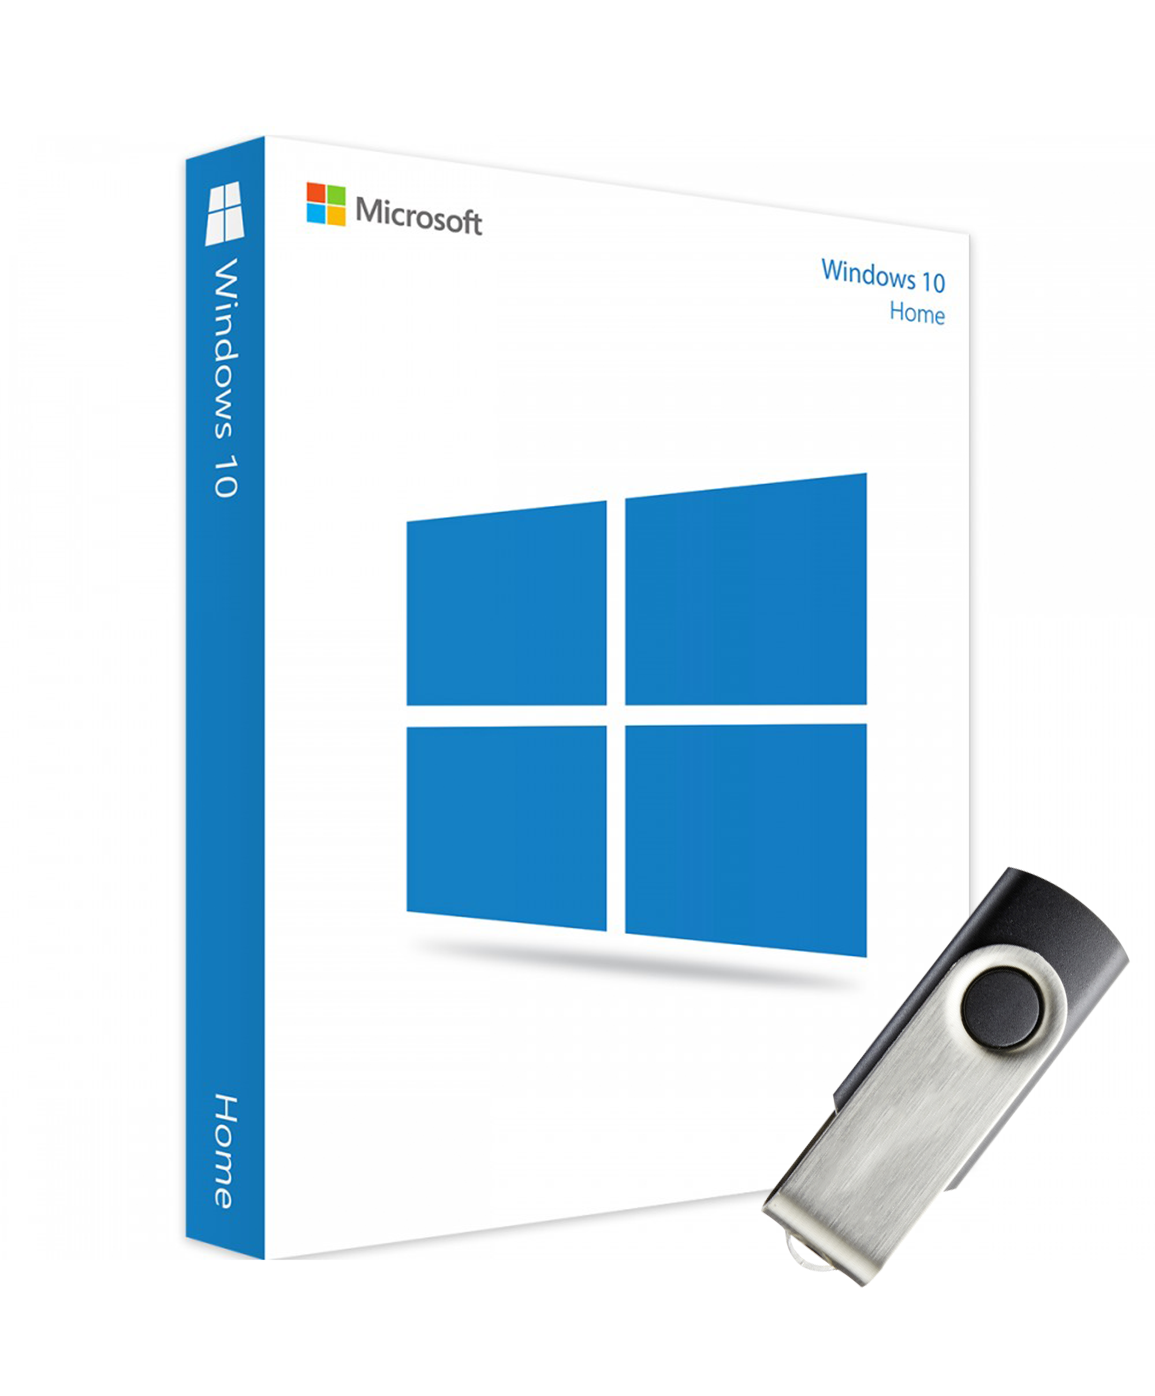 Microsoft Windows 10 Home als USB-Stick